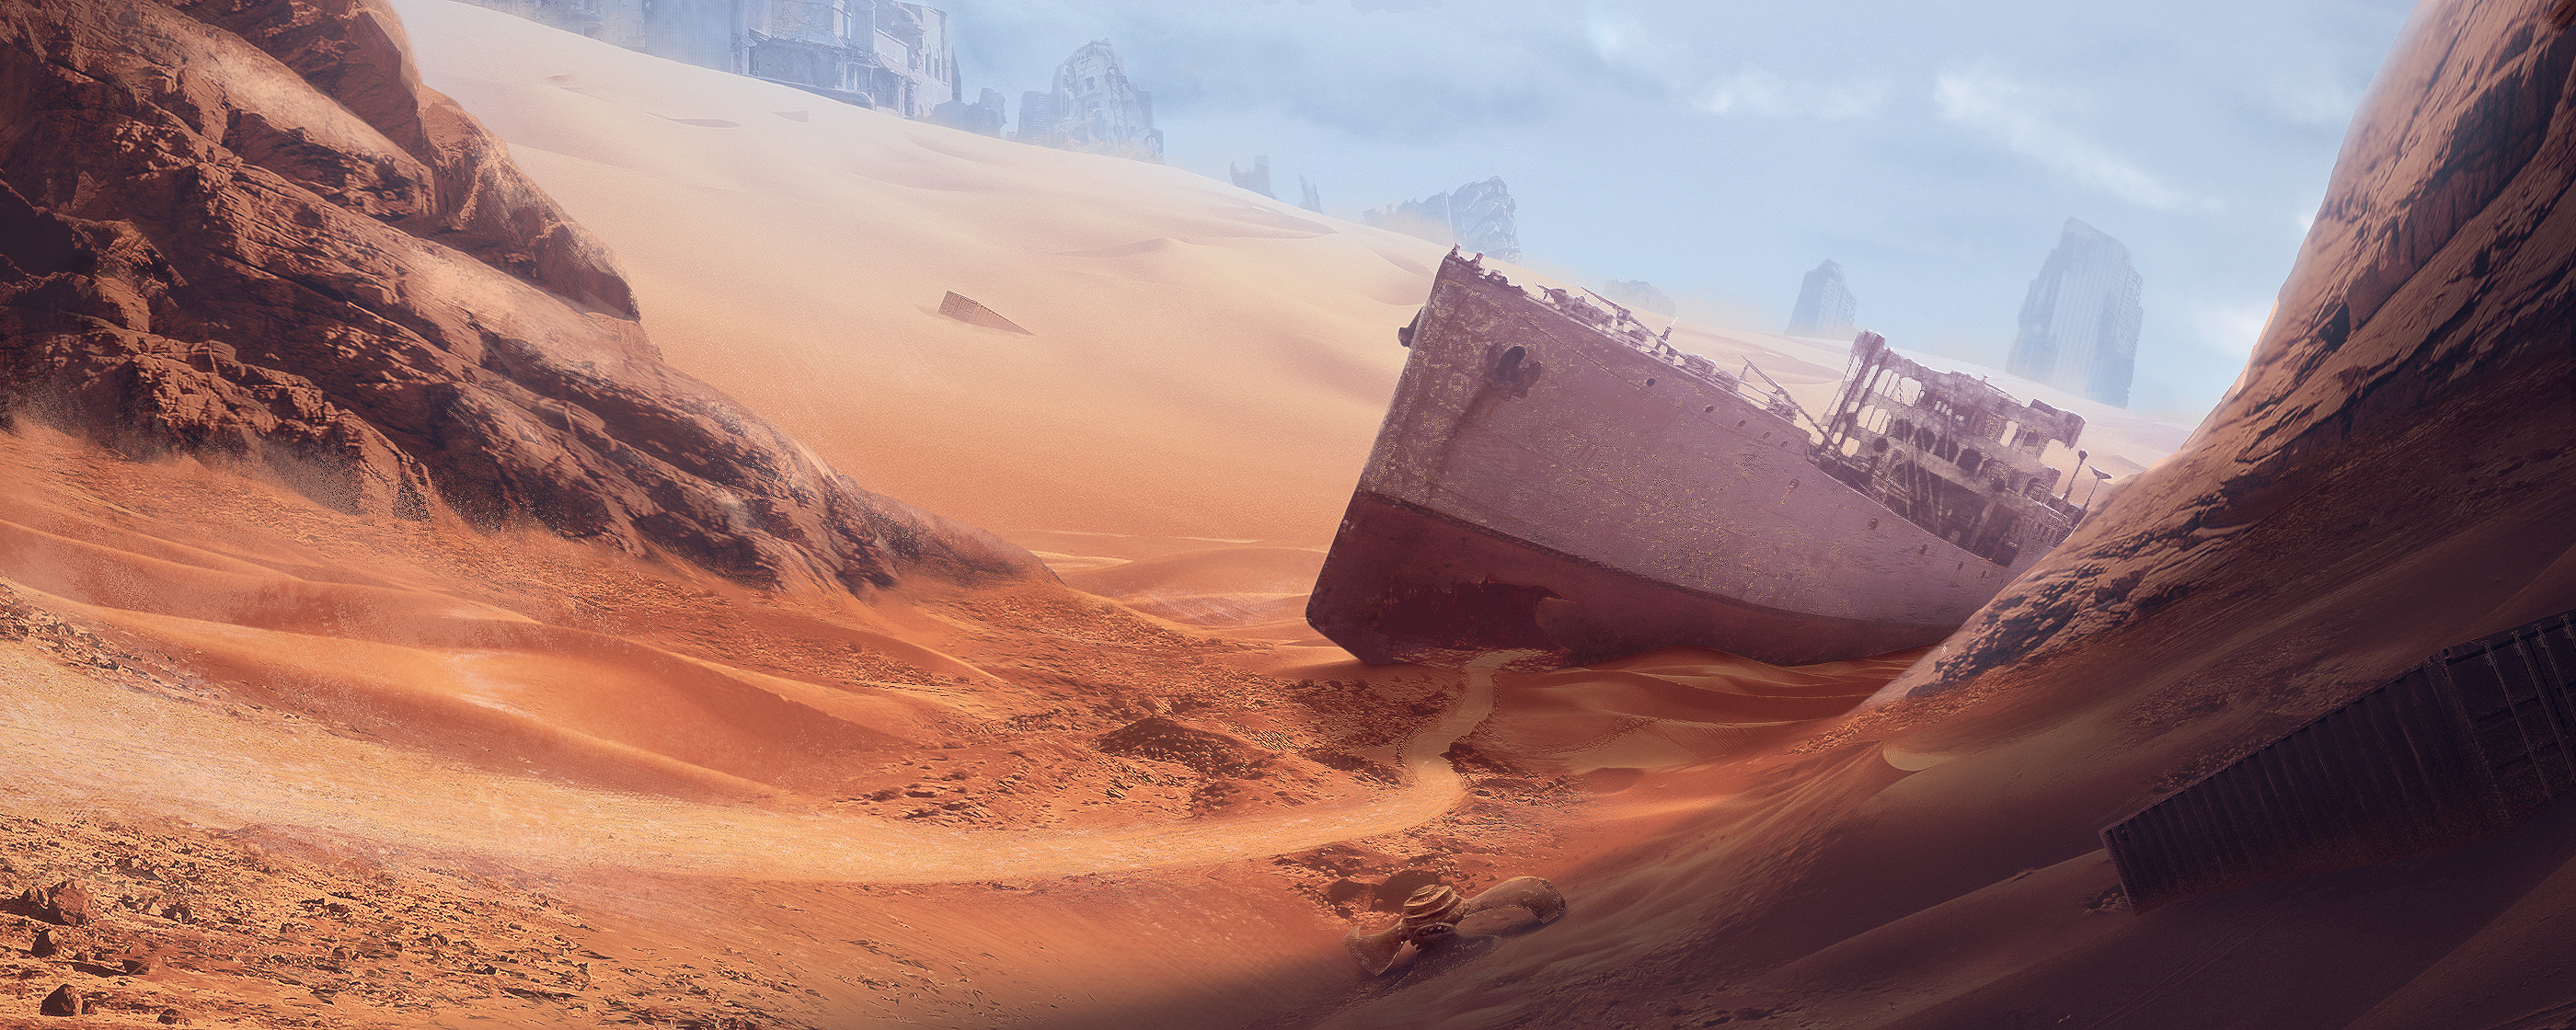 Artwork ArtStation Apocalyptic Futuristic Science Fiction Shipwreck Ship Vehicle Desert 2800x1120